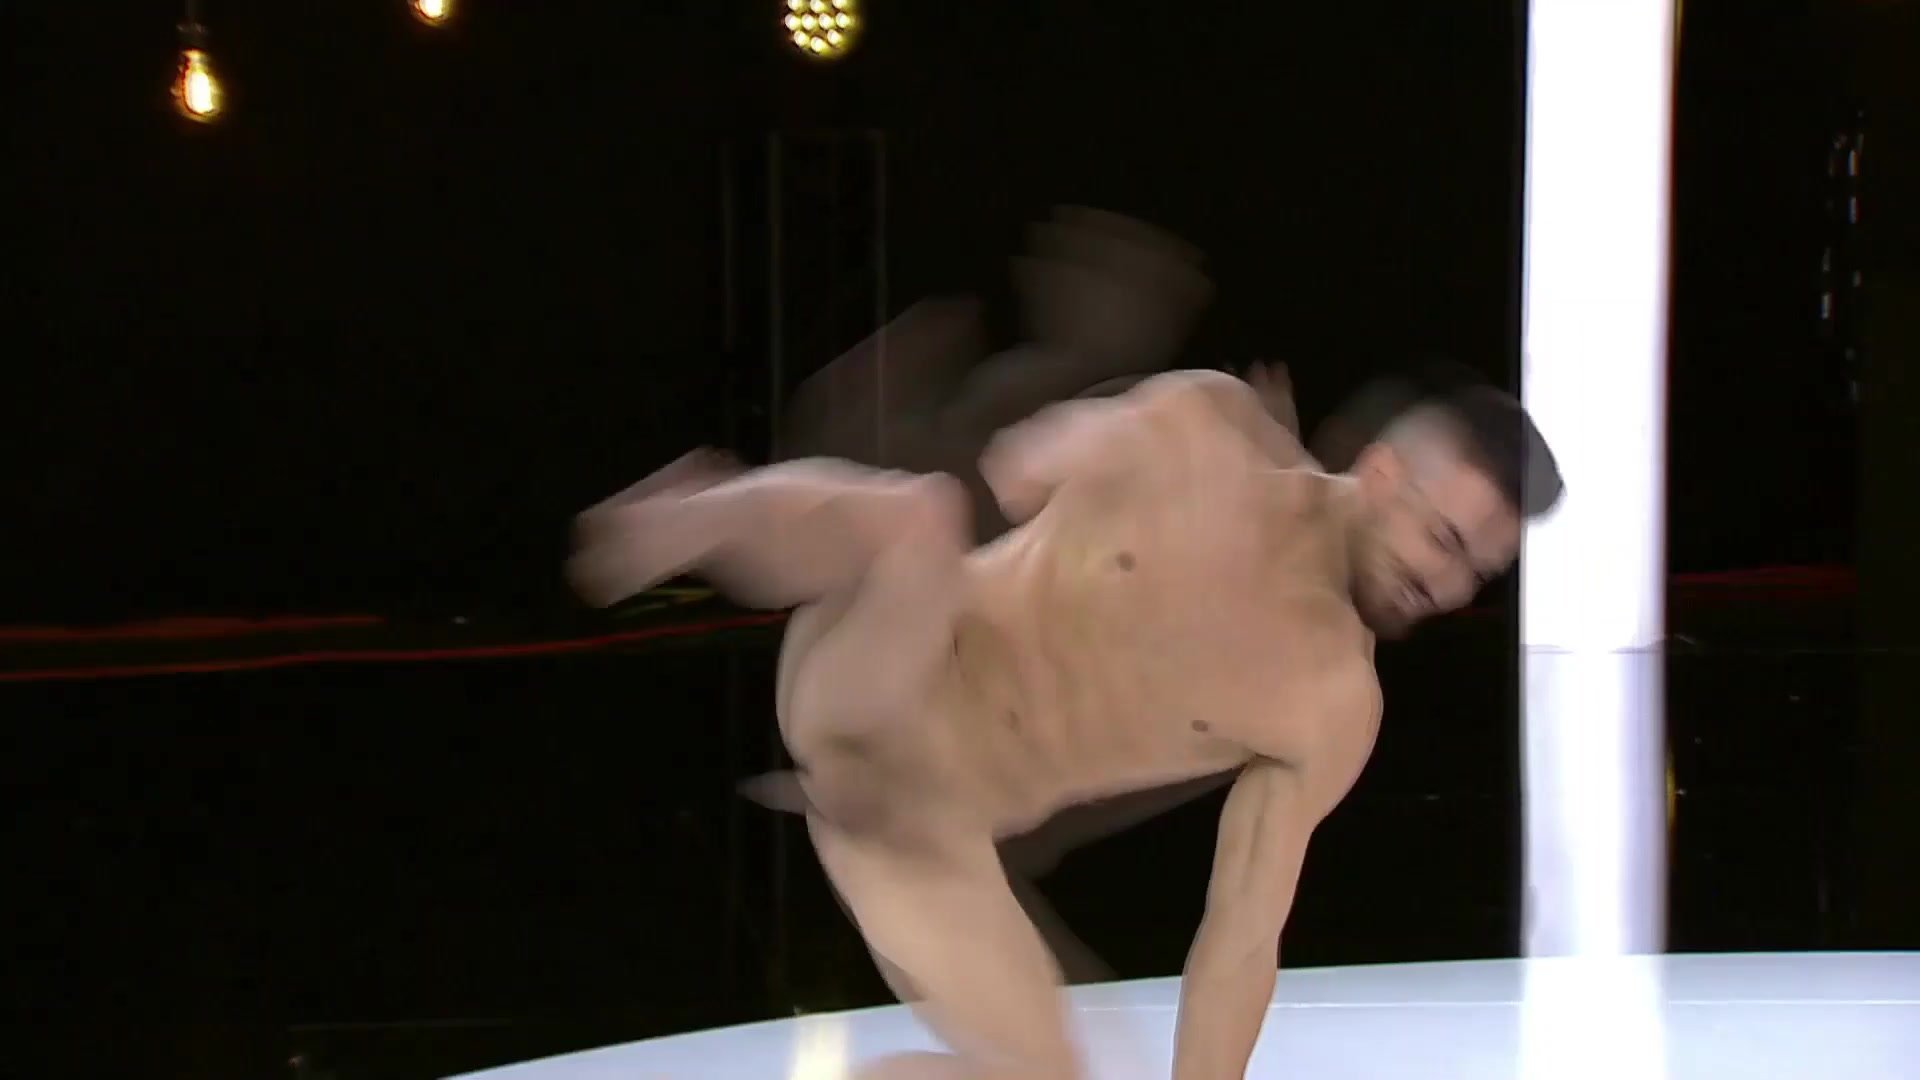 Hot hung Italian guy breakdances naked